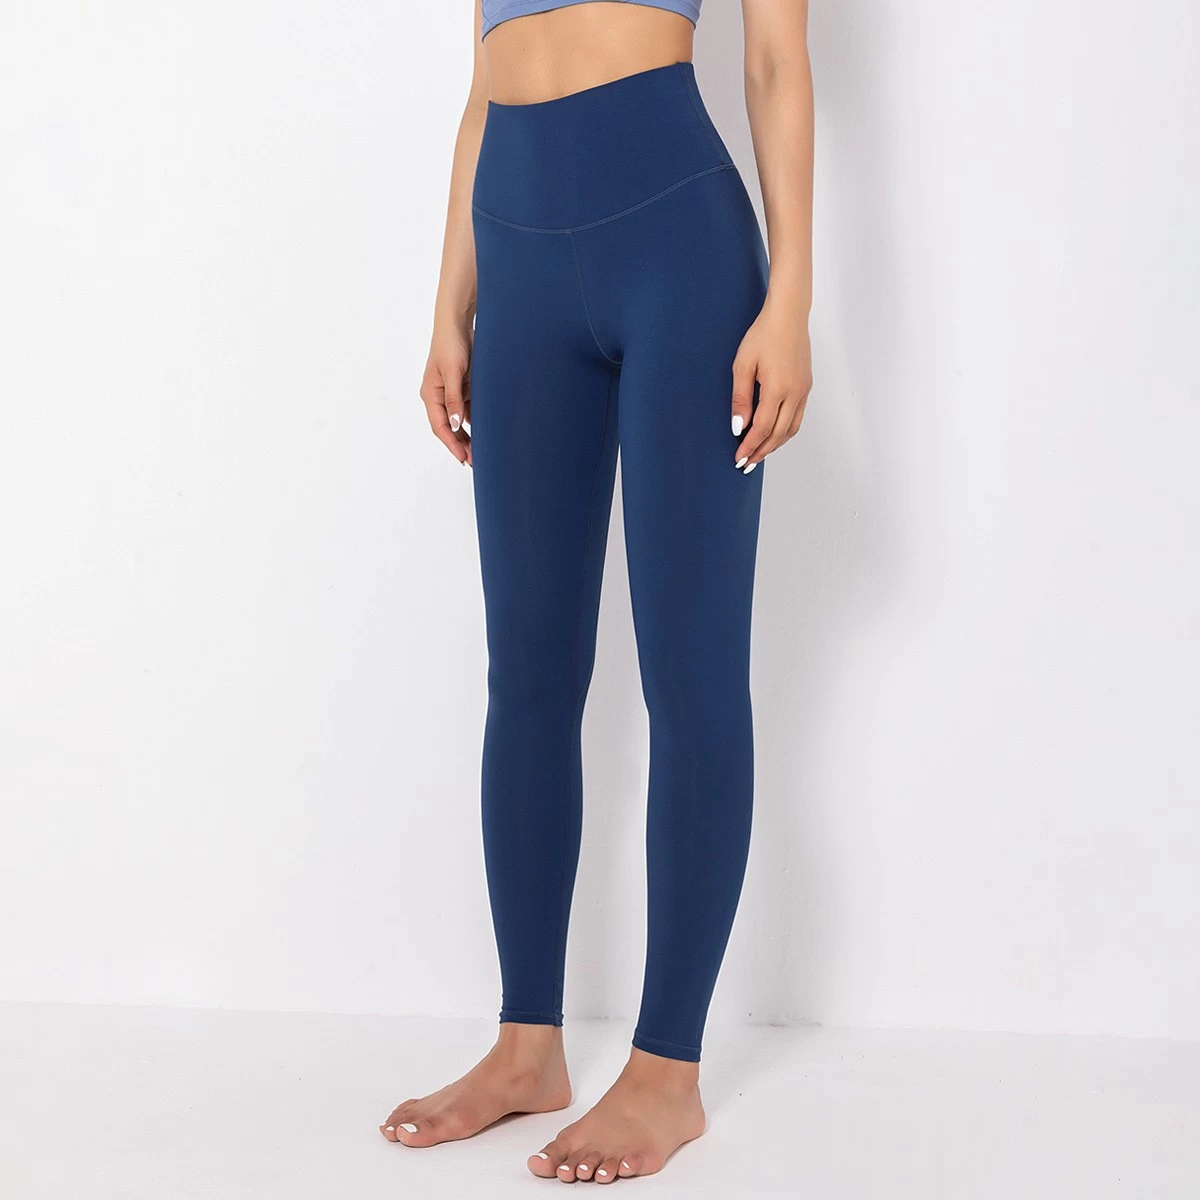 S-SHAPER Seamless Yoga Pants Nudity Fitness Leggings High Waist Hip Lift Body Sculpting Sport Legging Running Breathable Gym